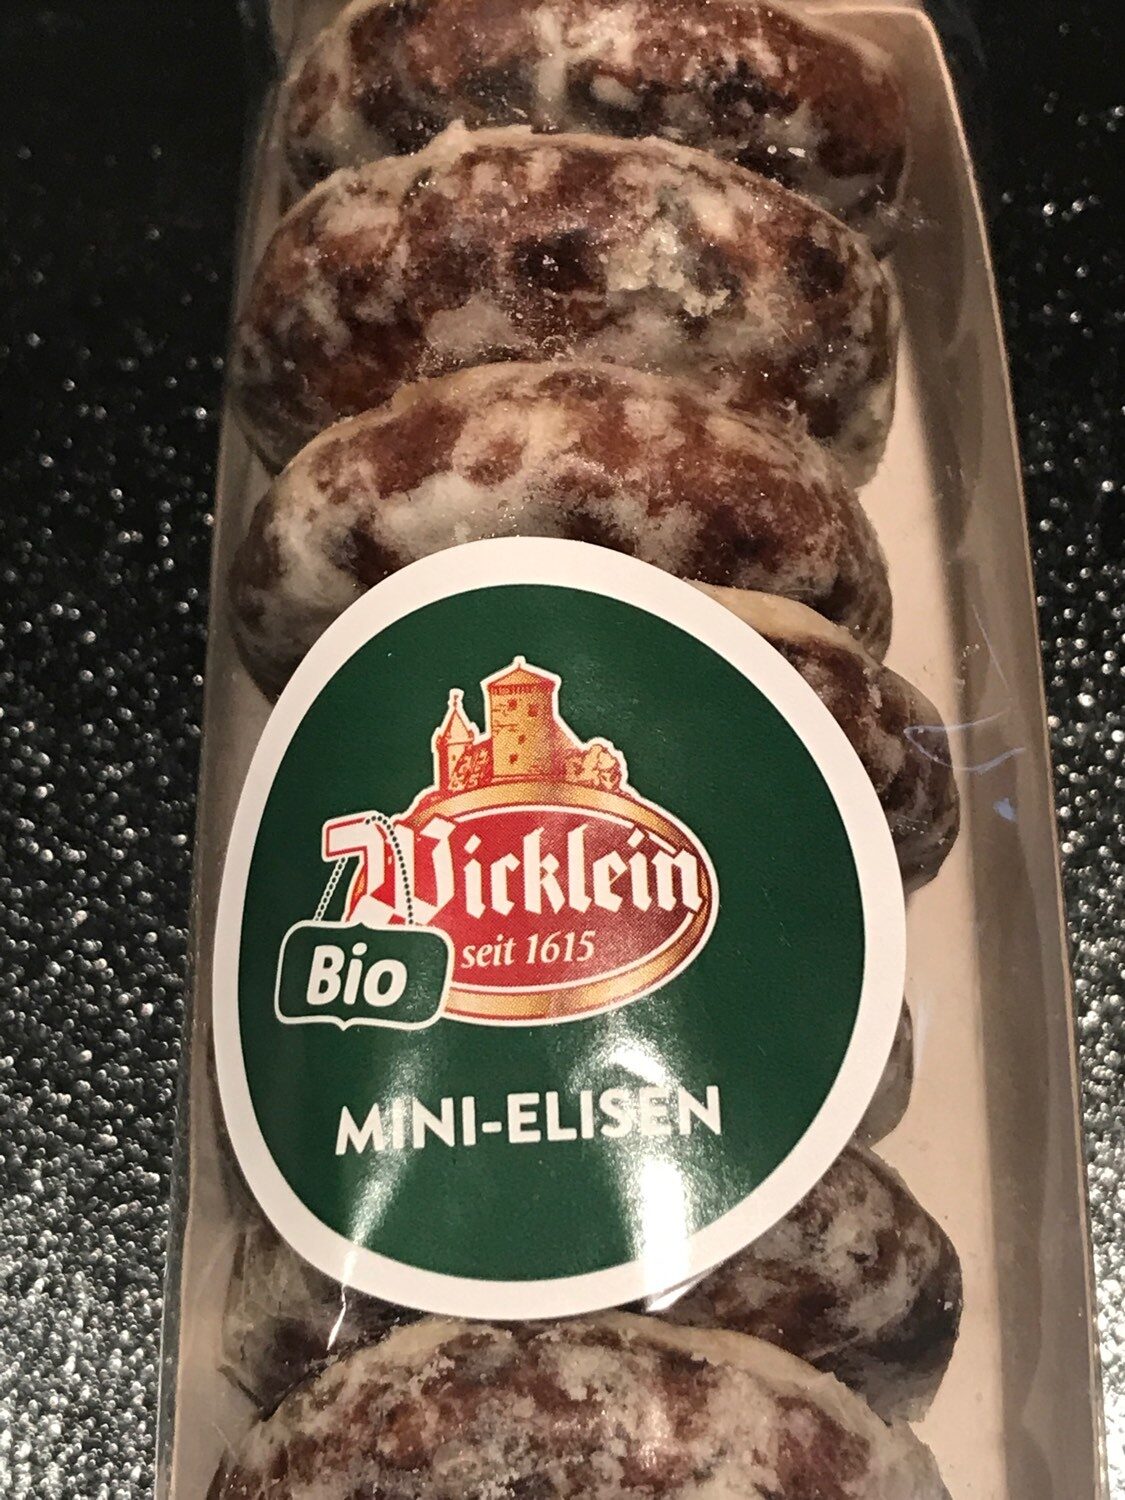 Mini Elisen Wicklein - Product - de